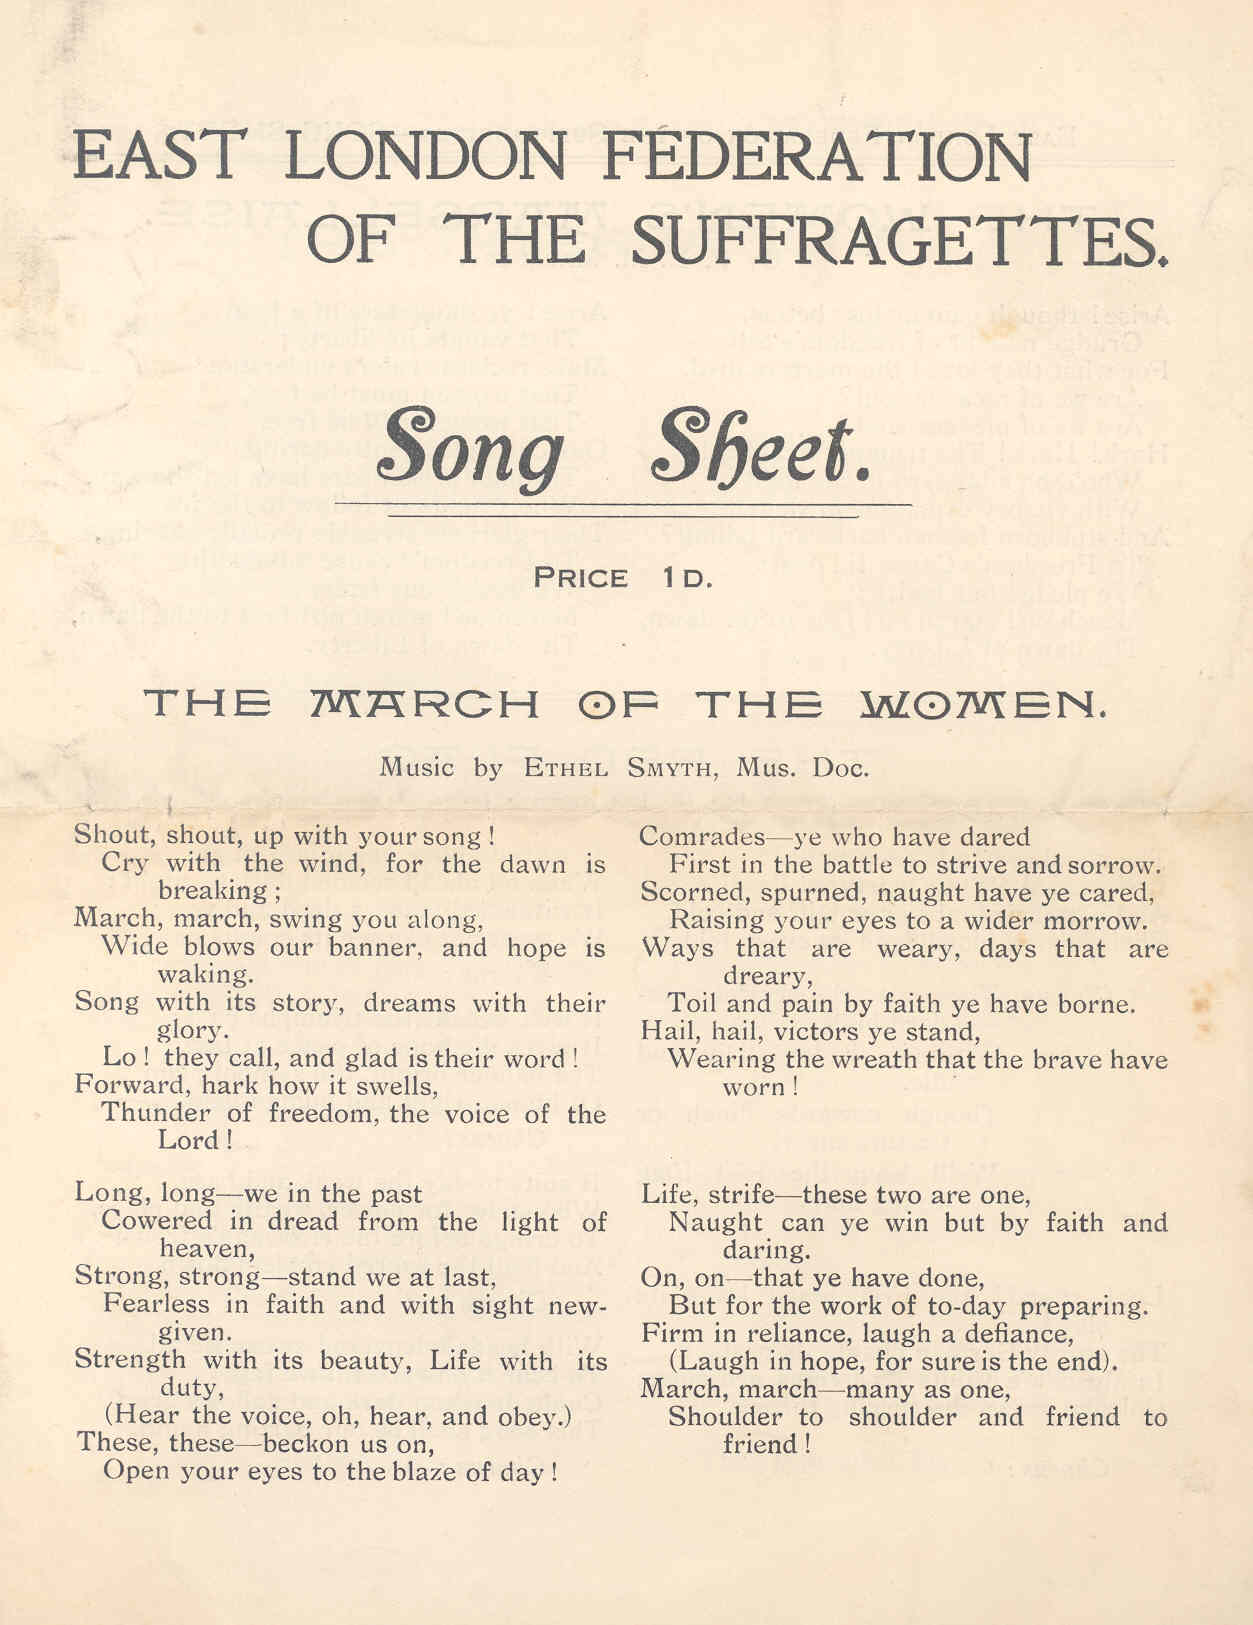 Suffragette song sheet